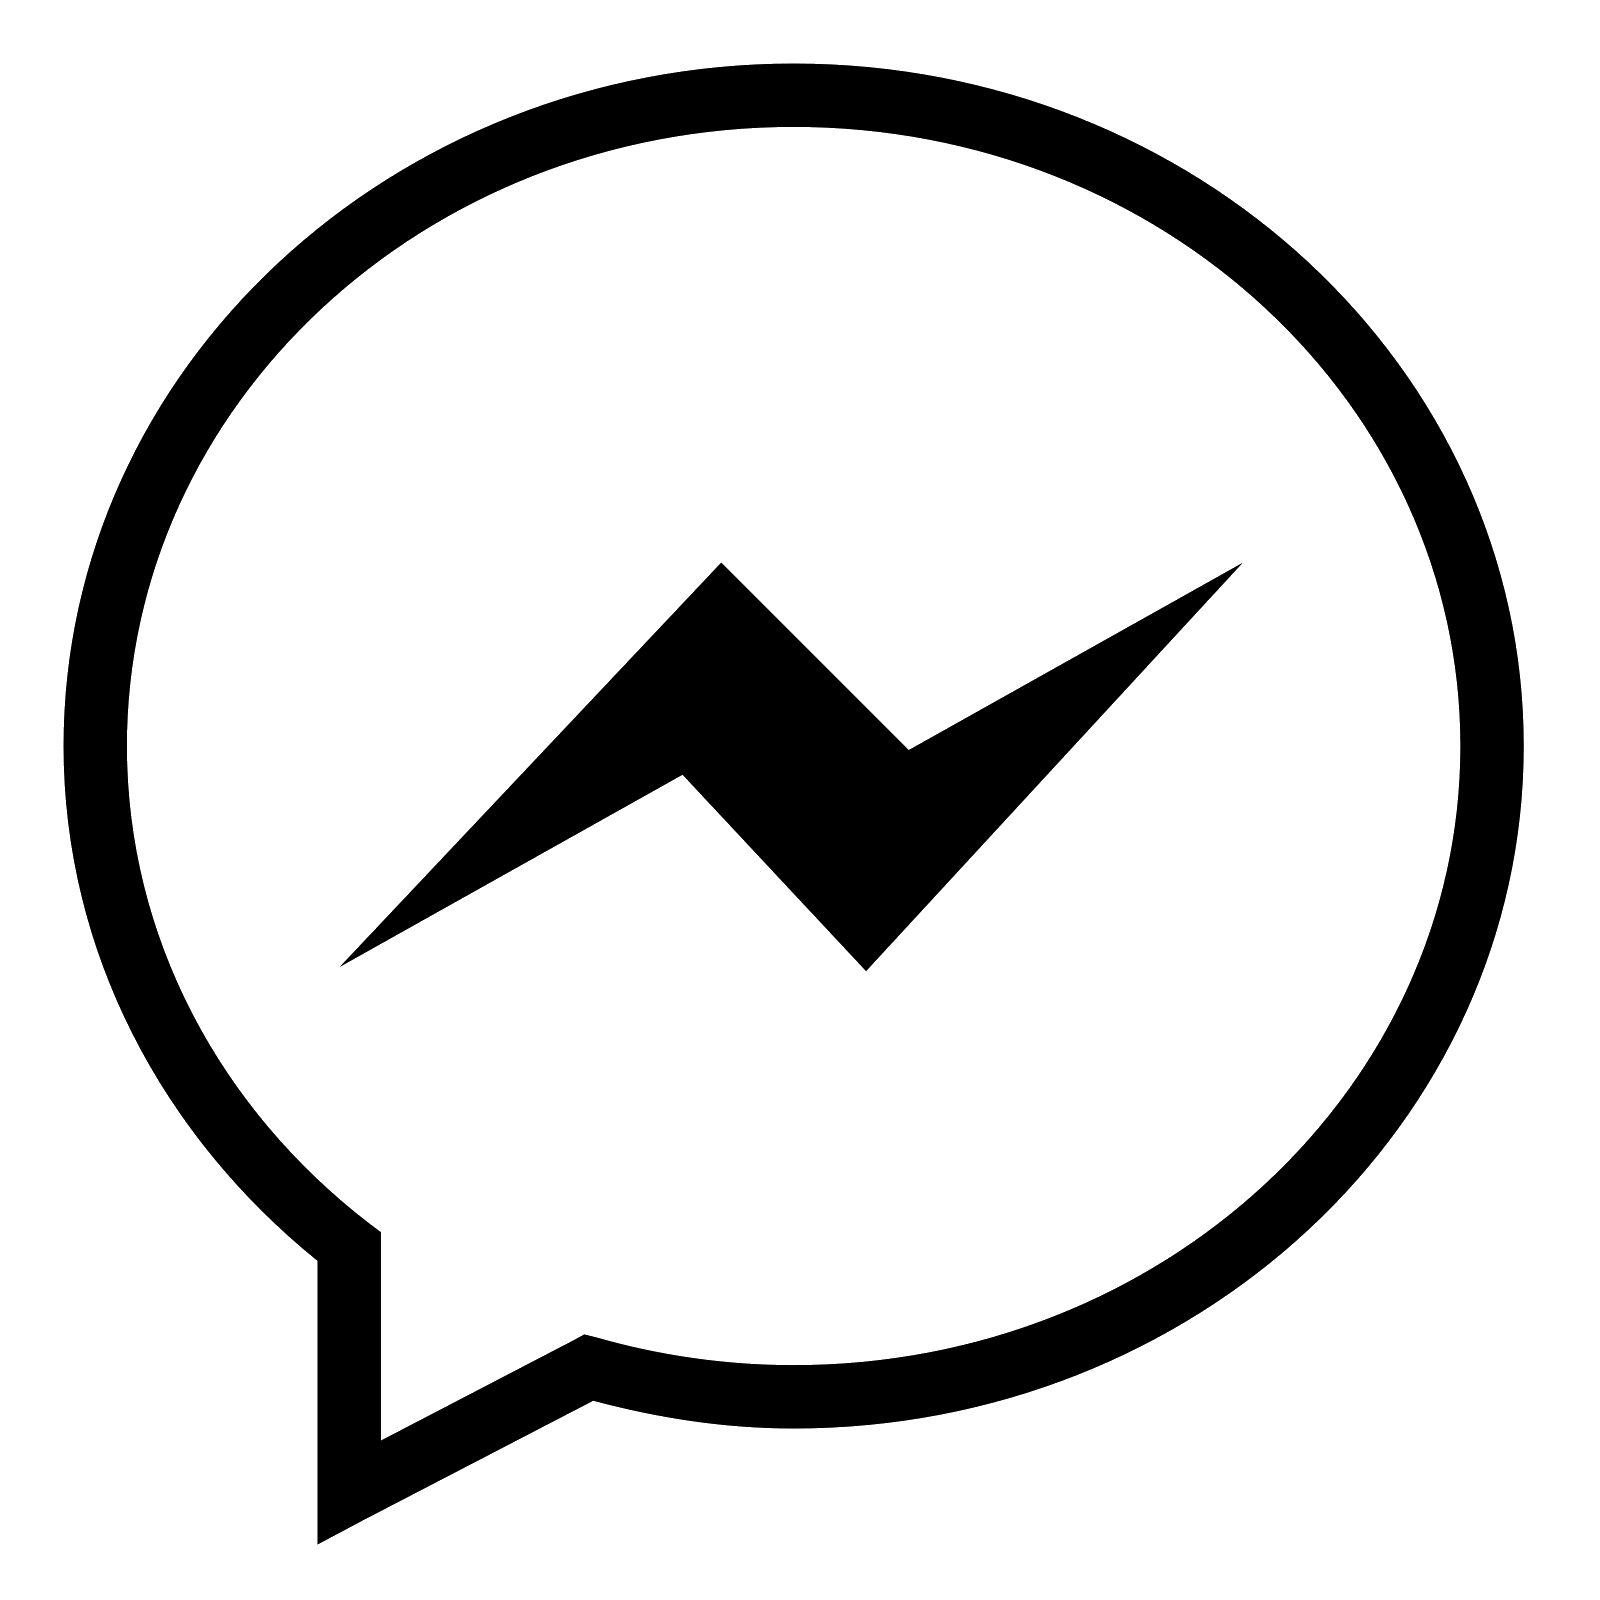 New Facebook Messenger Logo - Facebook messenger icon transparent 2018 : Kin coin offline wallet ...